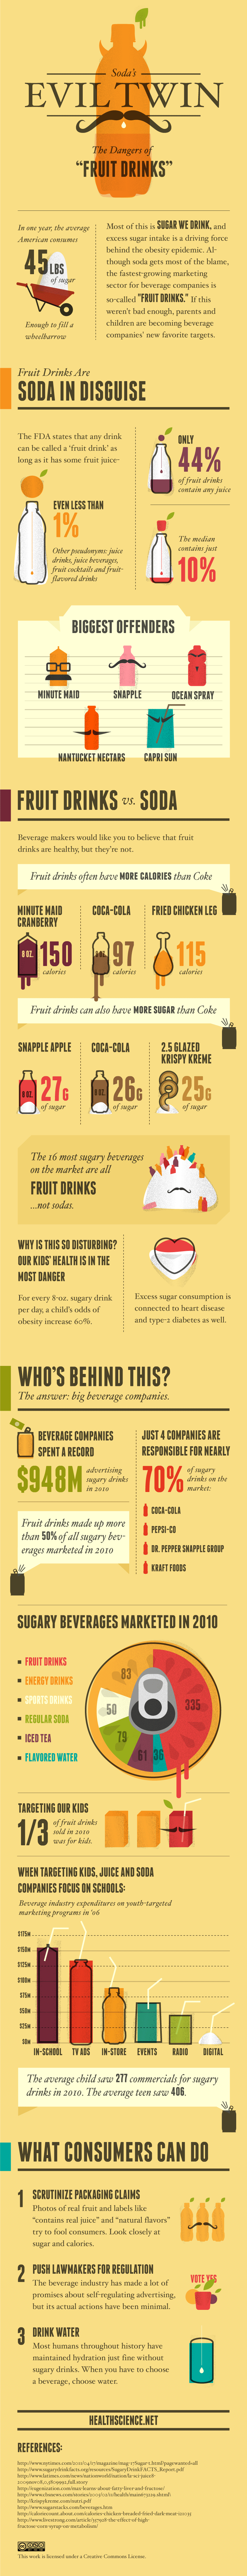 Soda's Evil Twin - The Dangers of Fruit Drinks